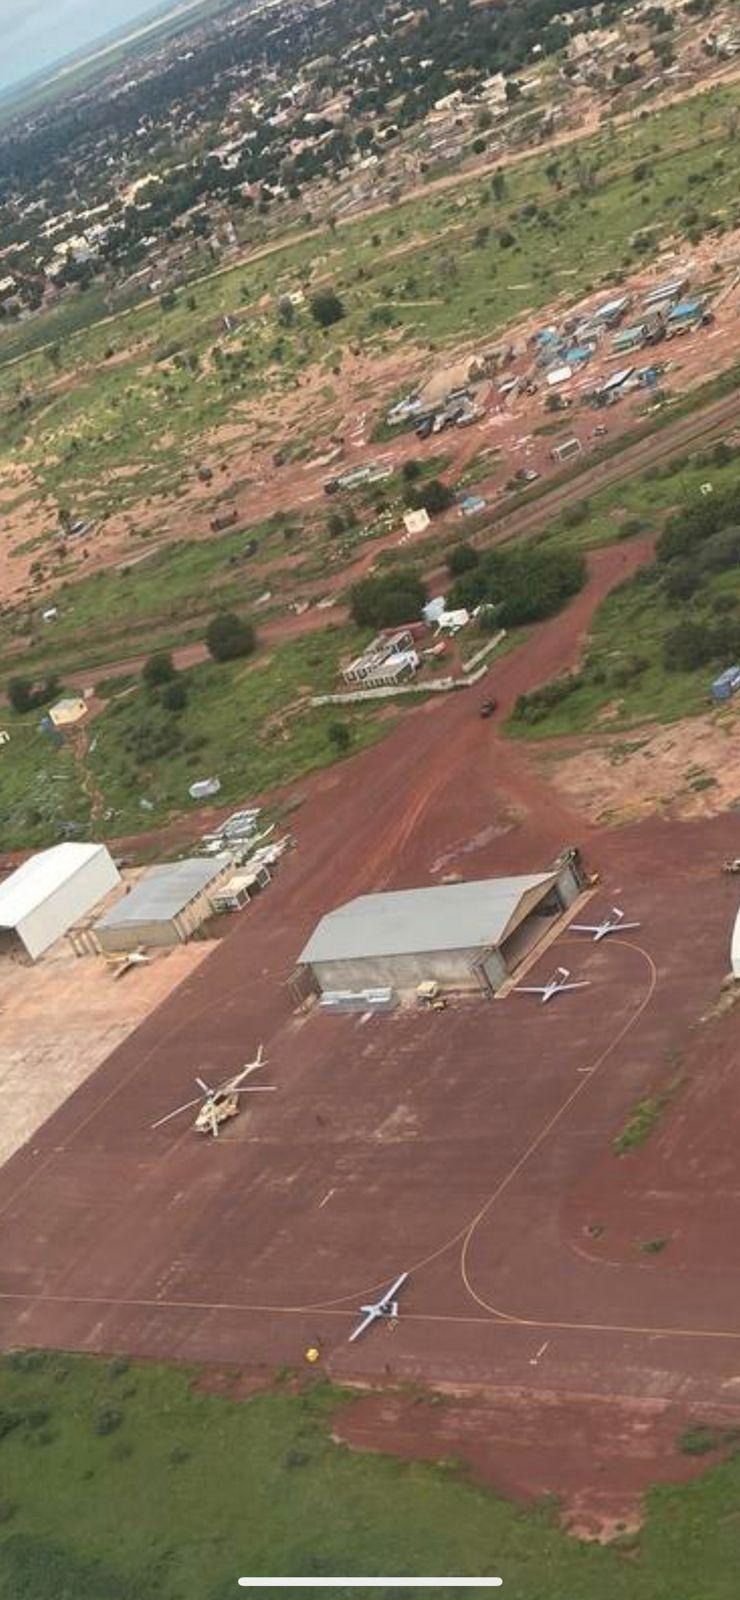 Turkish Bayraktar drones spotted at Wagner military base in Mali 2